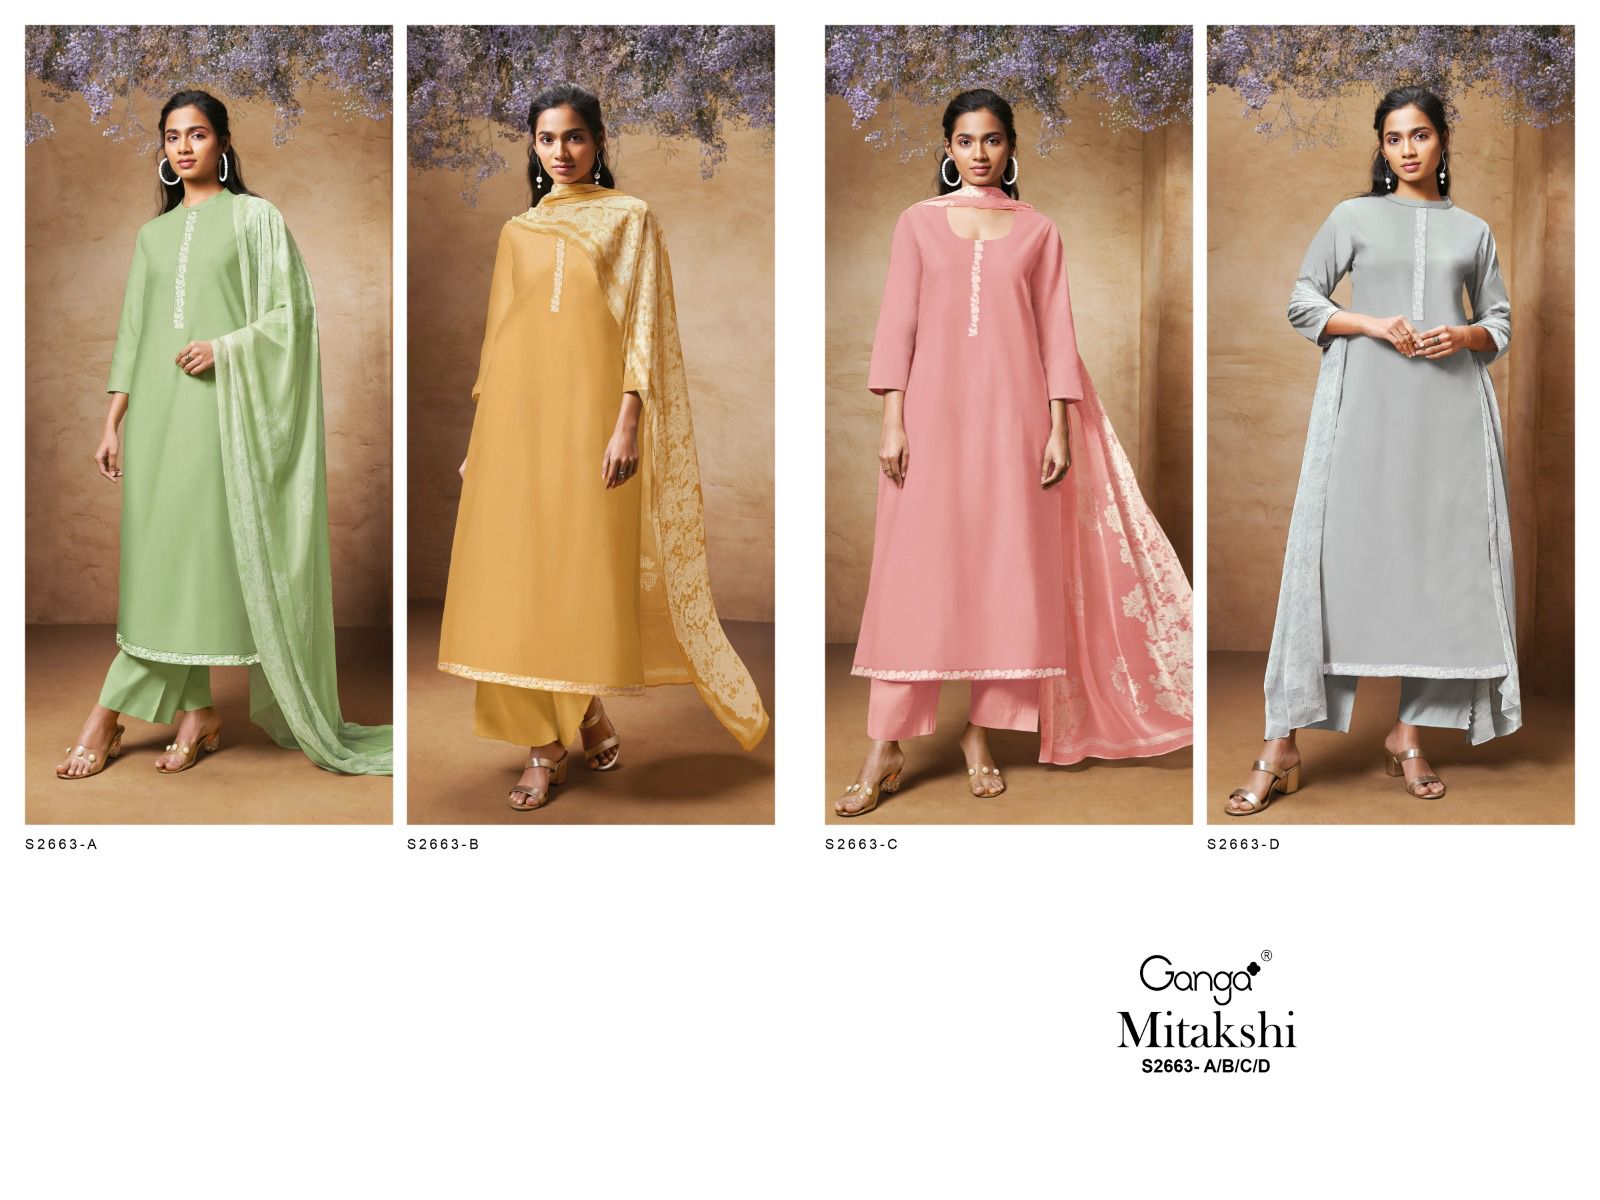 Mitakshi 2663 Ganga Premium Cotton Plazzo Style Suits Supplier Gujarat